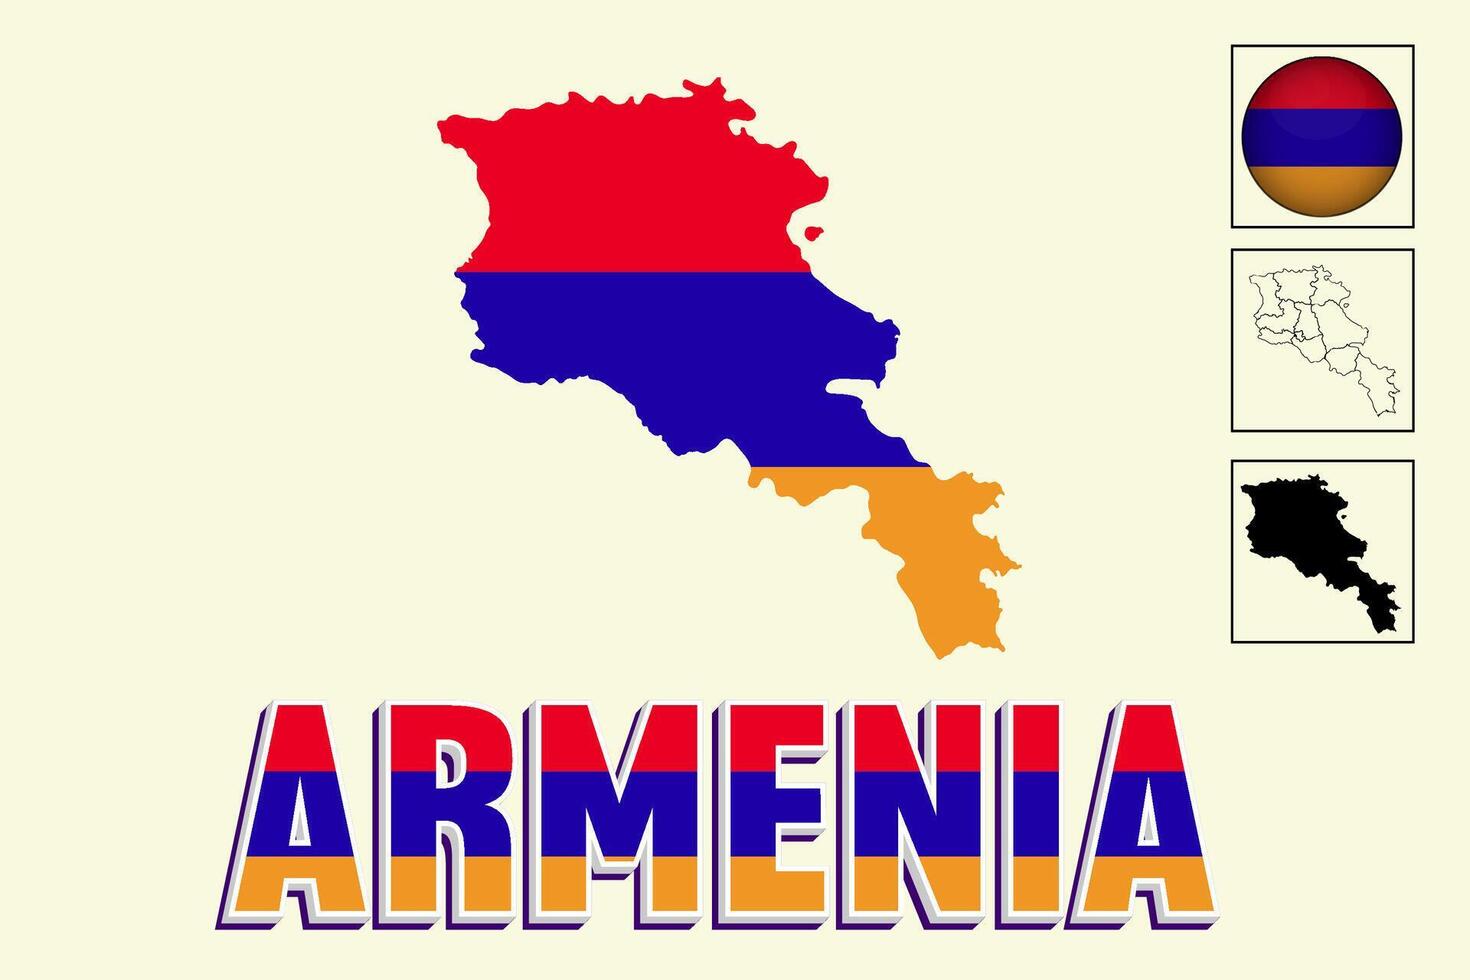 Armenia map and Armenia flag vector drawing